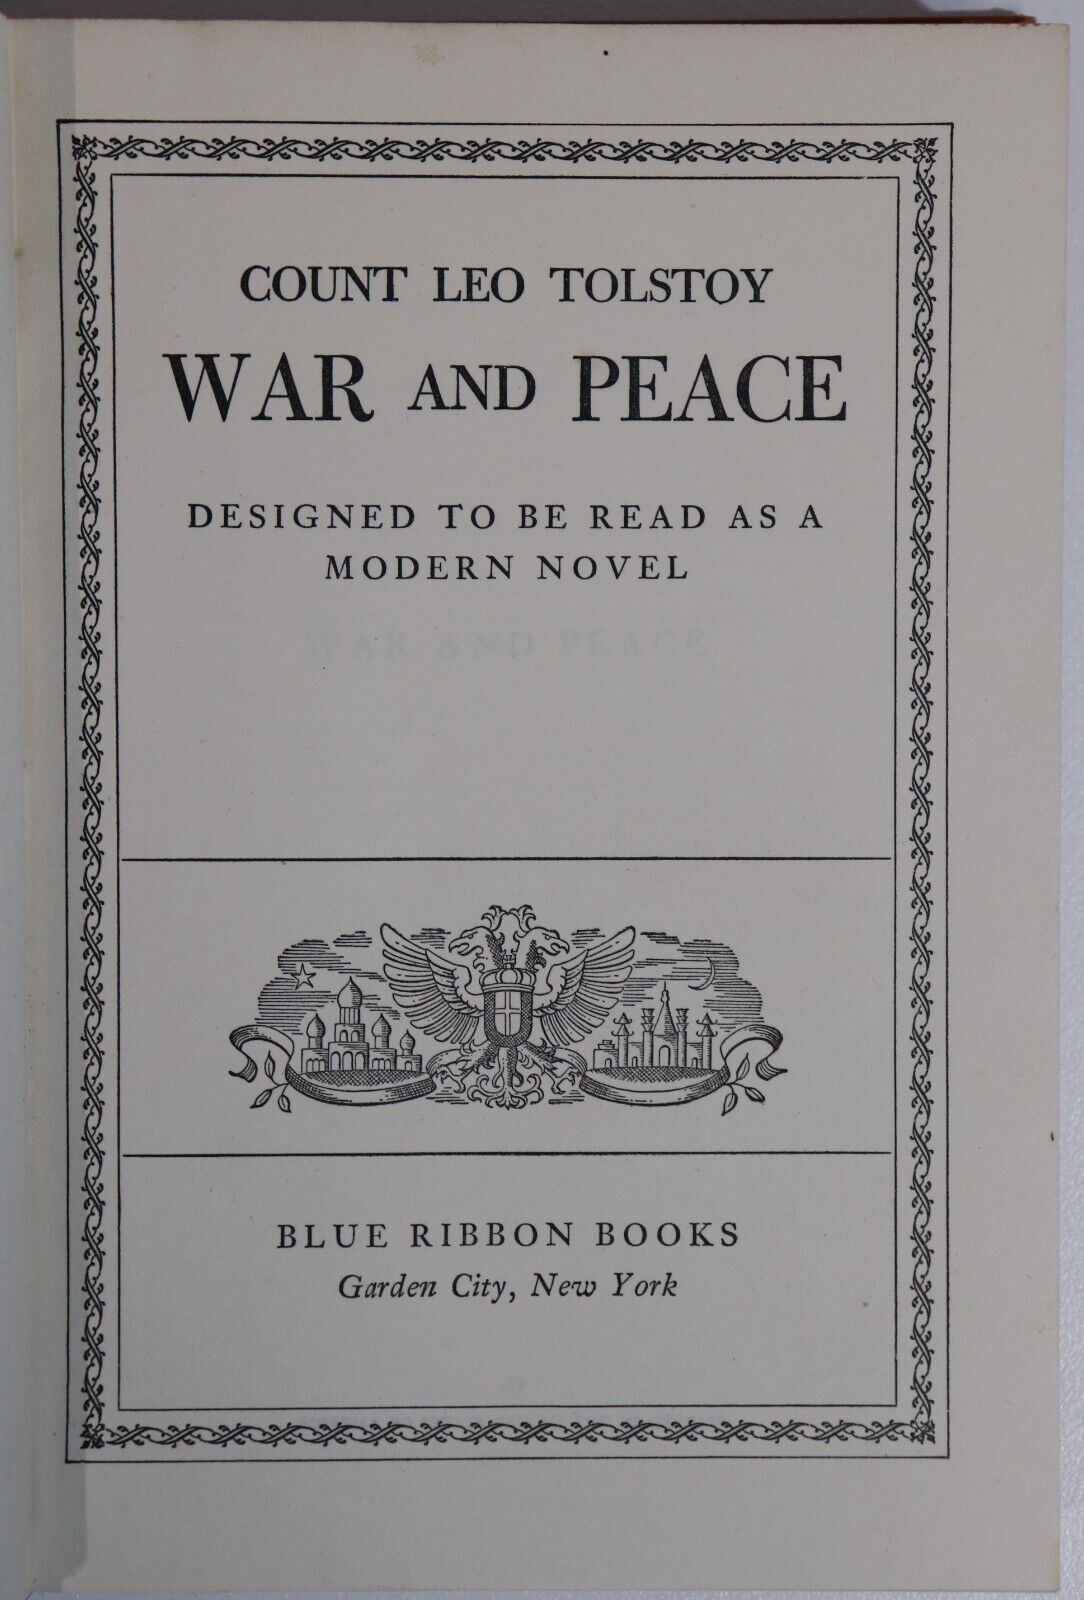 War & Peace: A Modern Novel by Leo Tolstoy - c1965 - Classic Literature Book - 0